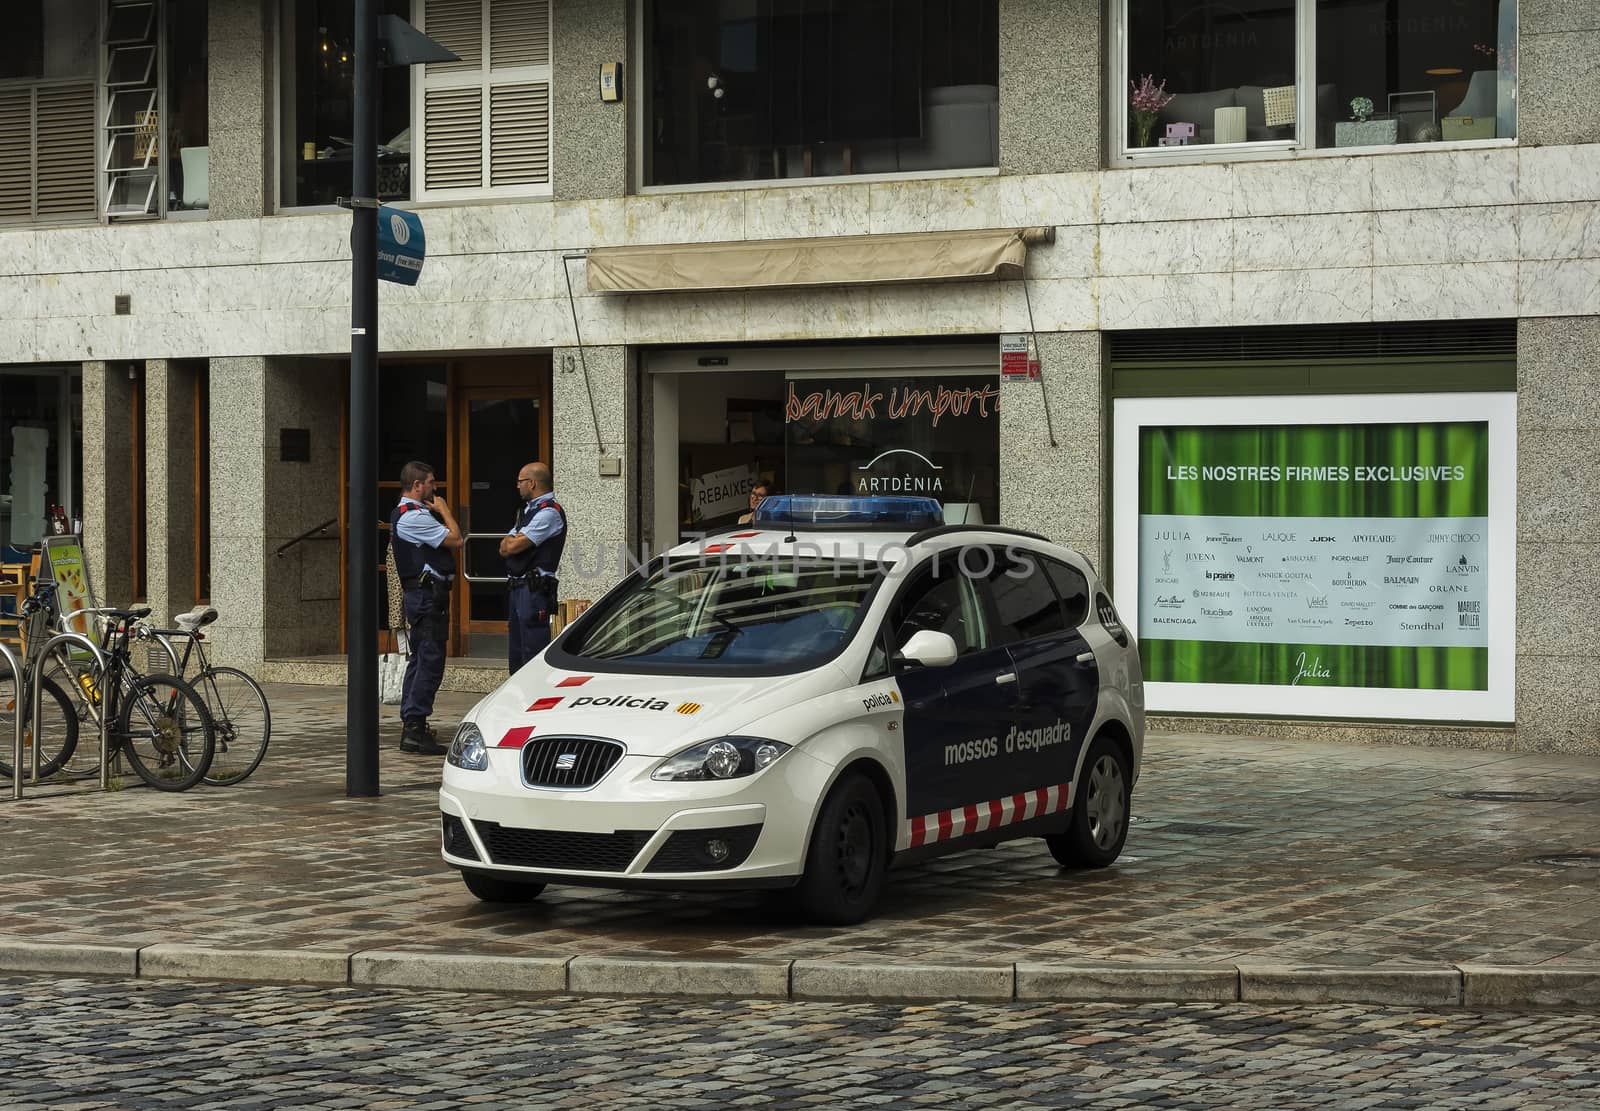 Spain, Girona - 09/18/2012: Police on the city street